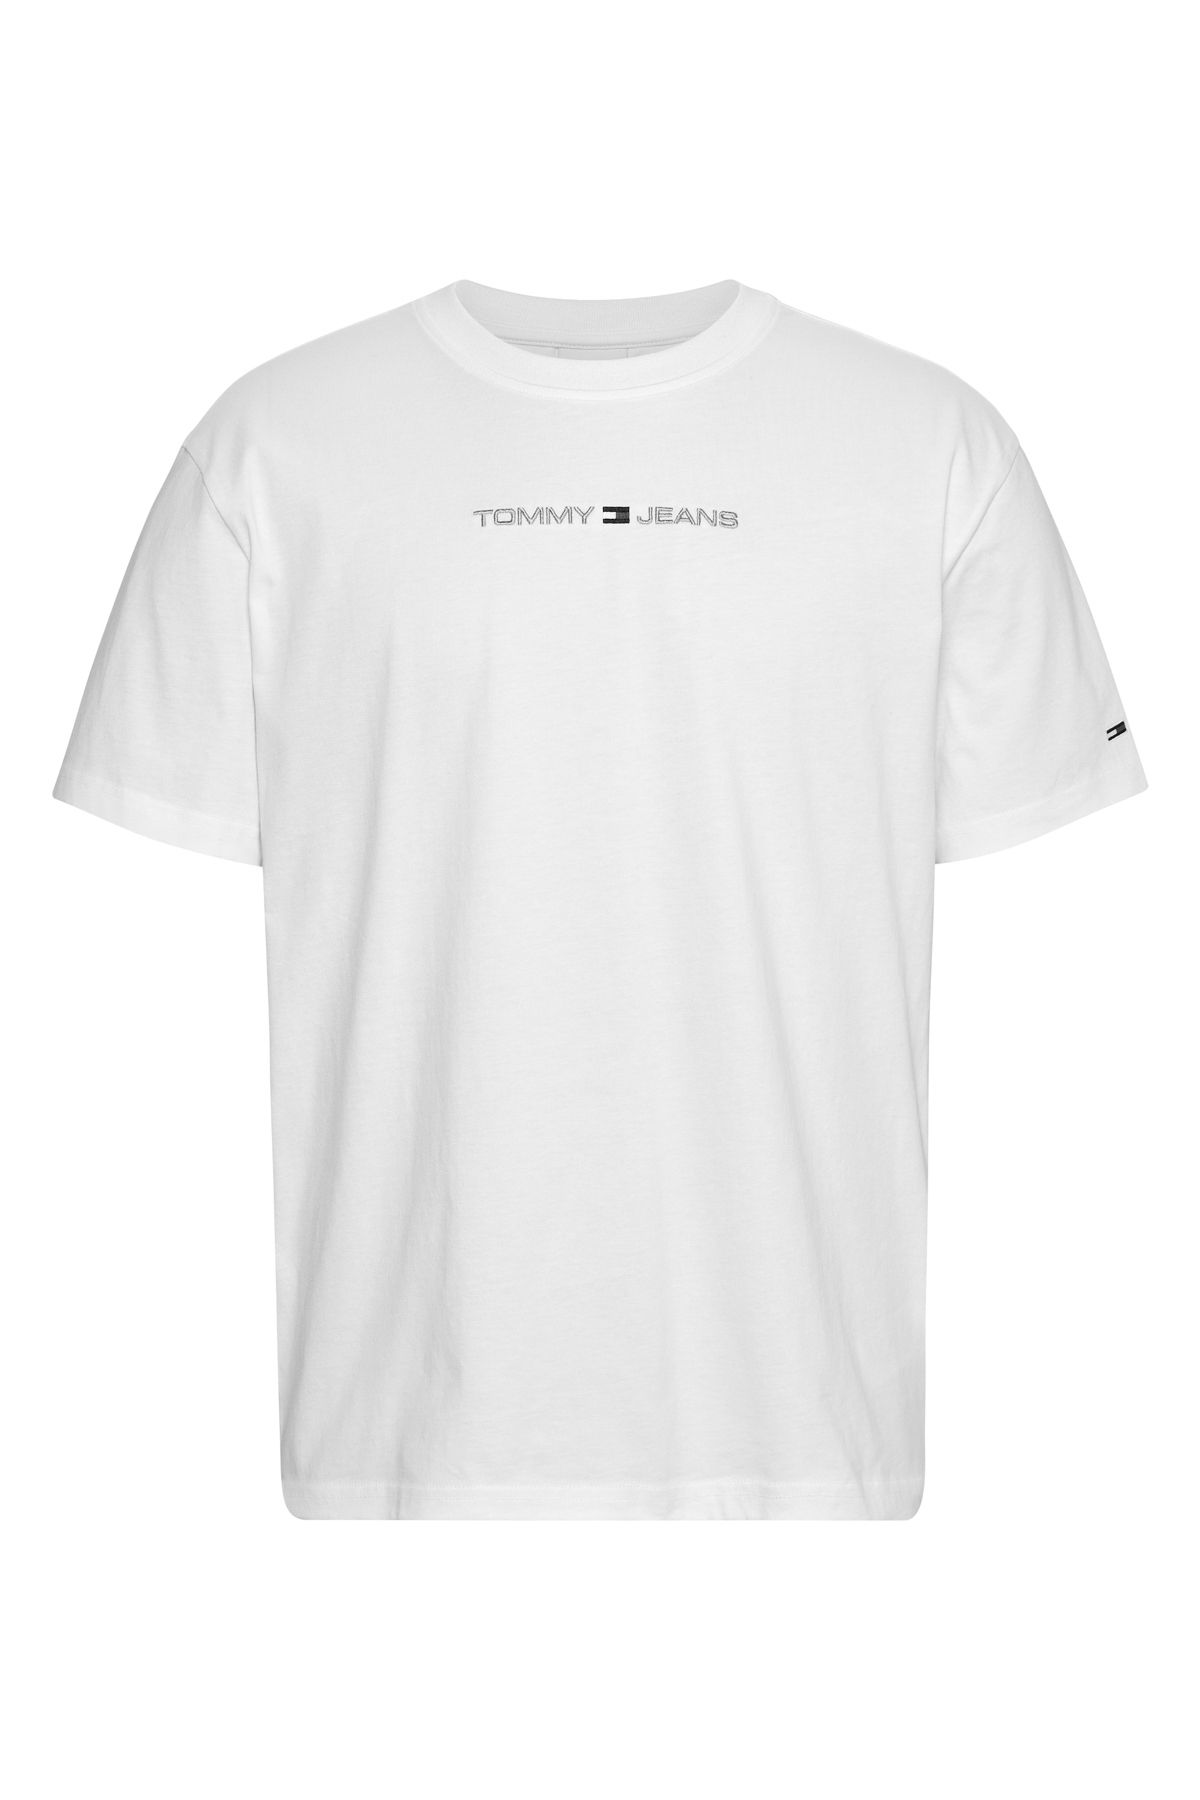 Tommy Hilfiger Trendyol Yorumları Erkek - White T-Shirt Fiyatı